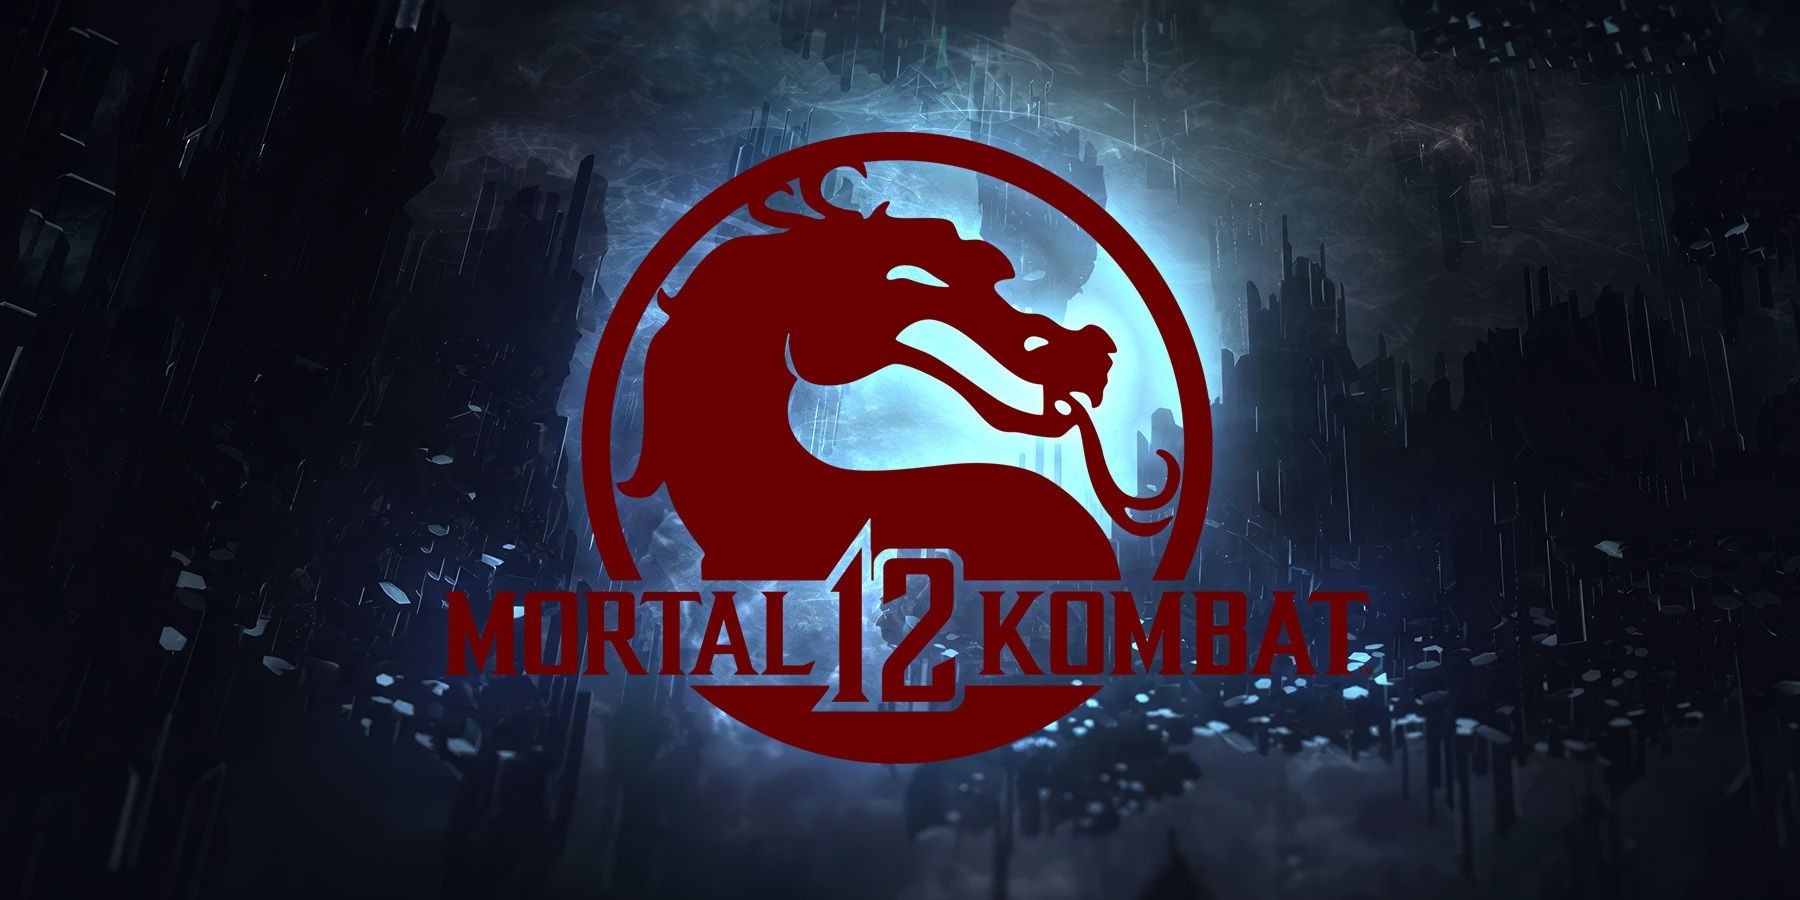 Mortal Kombat 12 Gets Its First Teaser